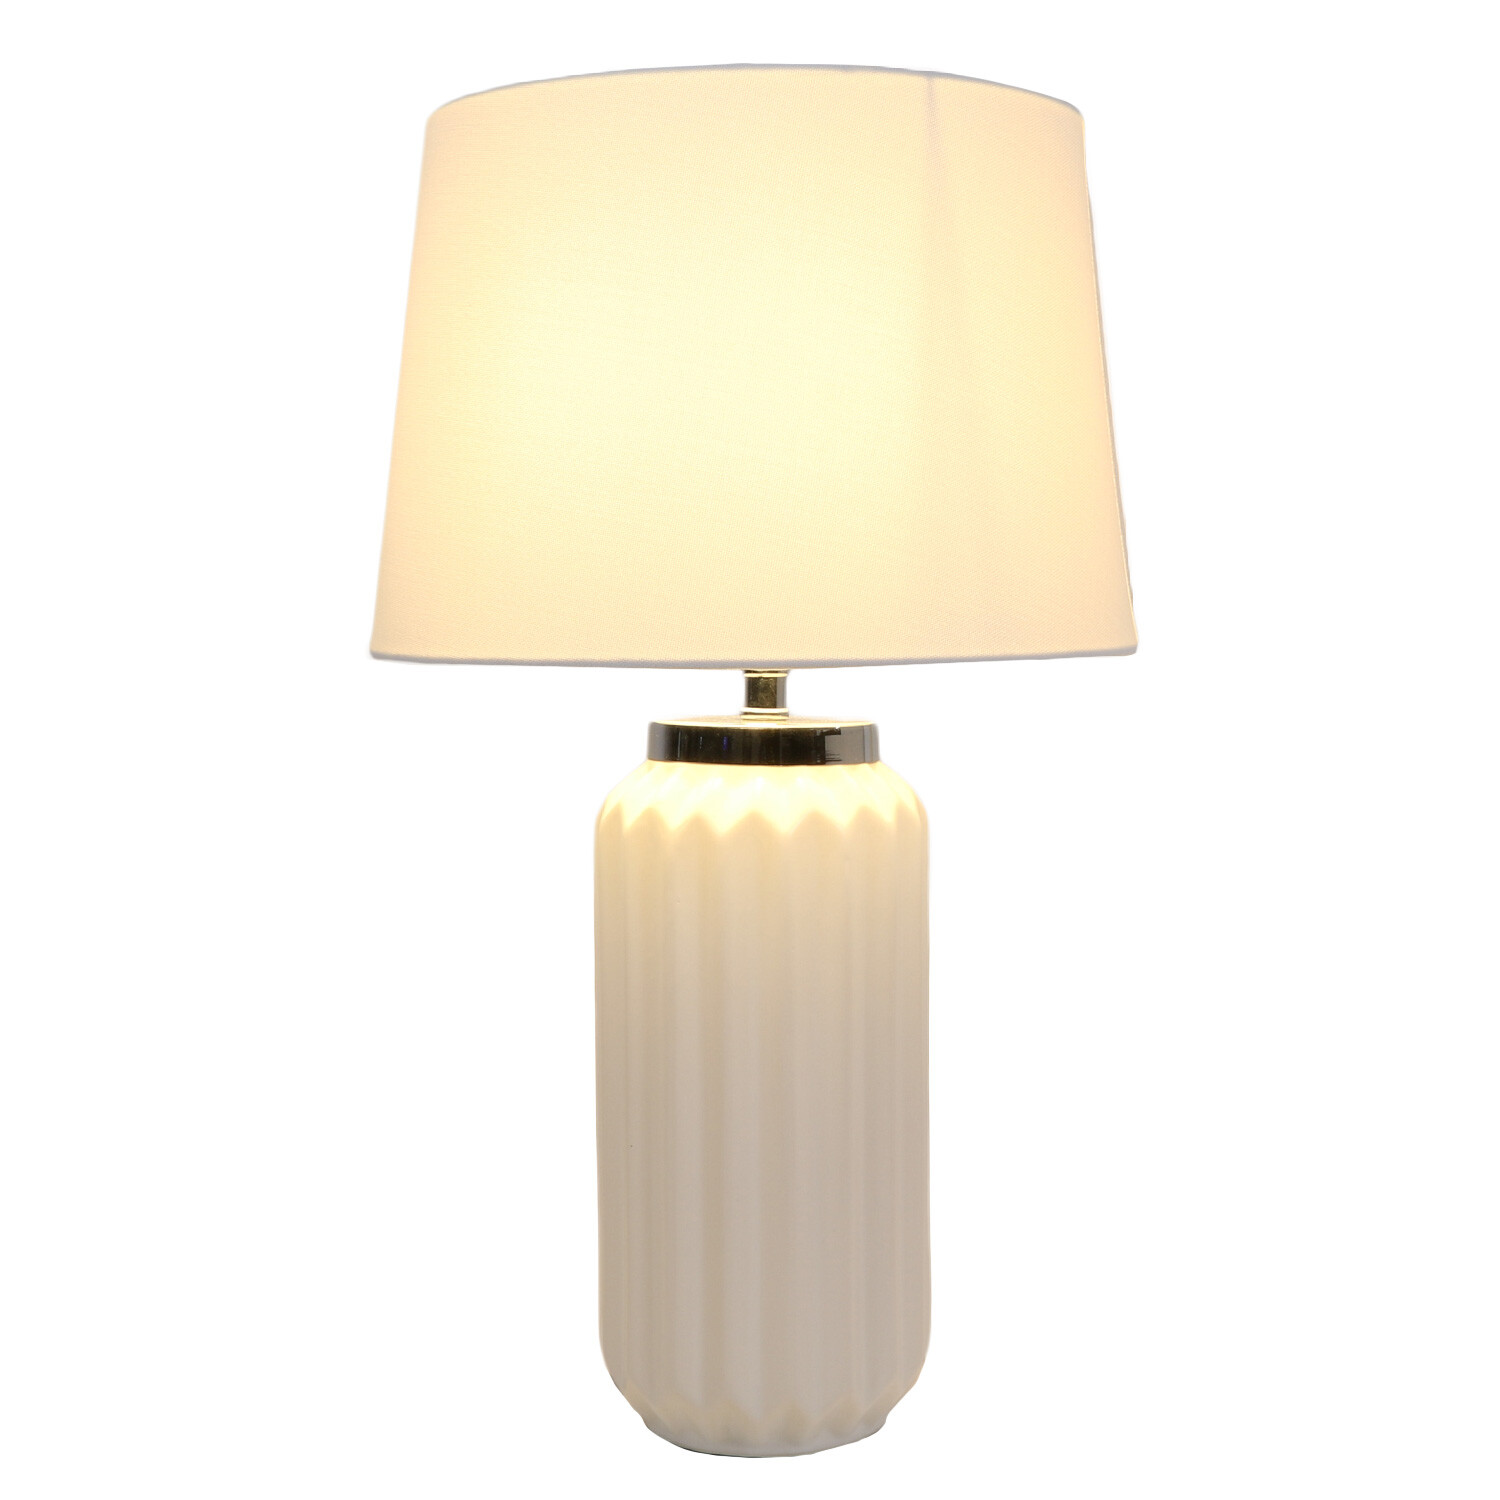 Belle Table Lamp - White Image 2